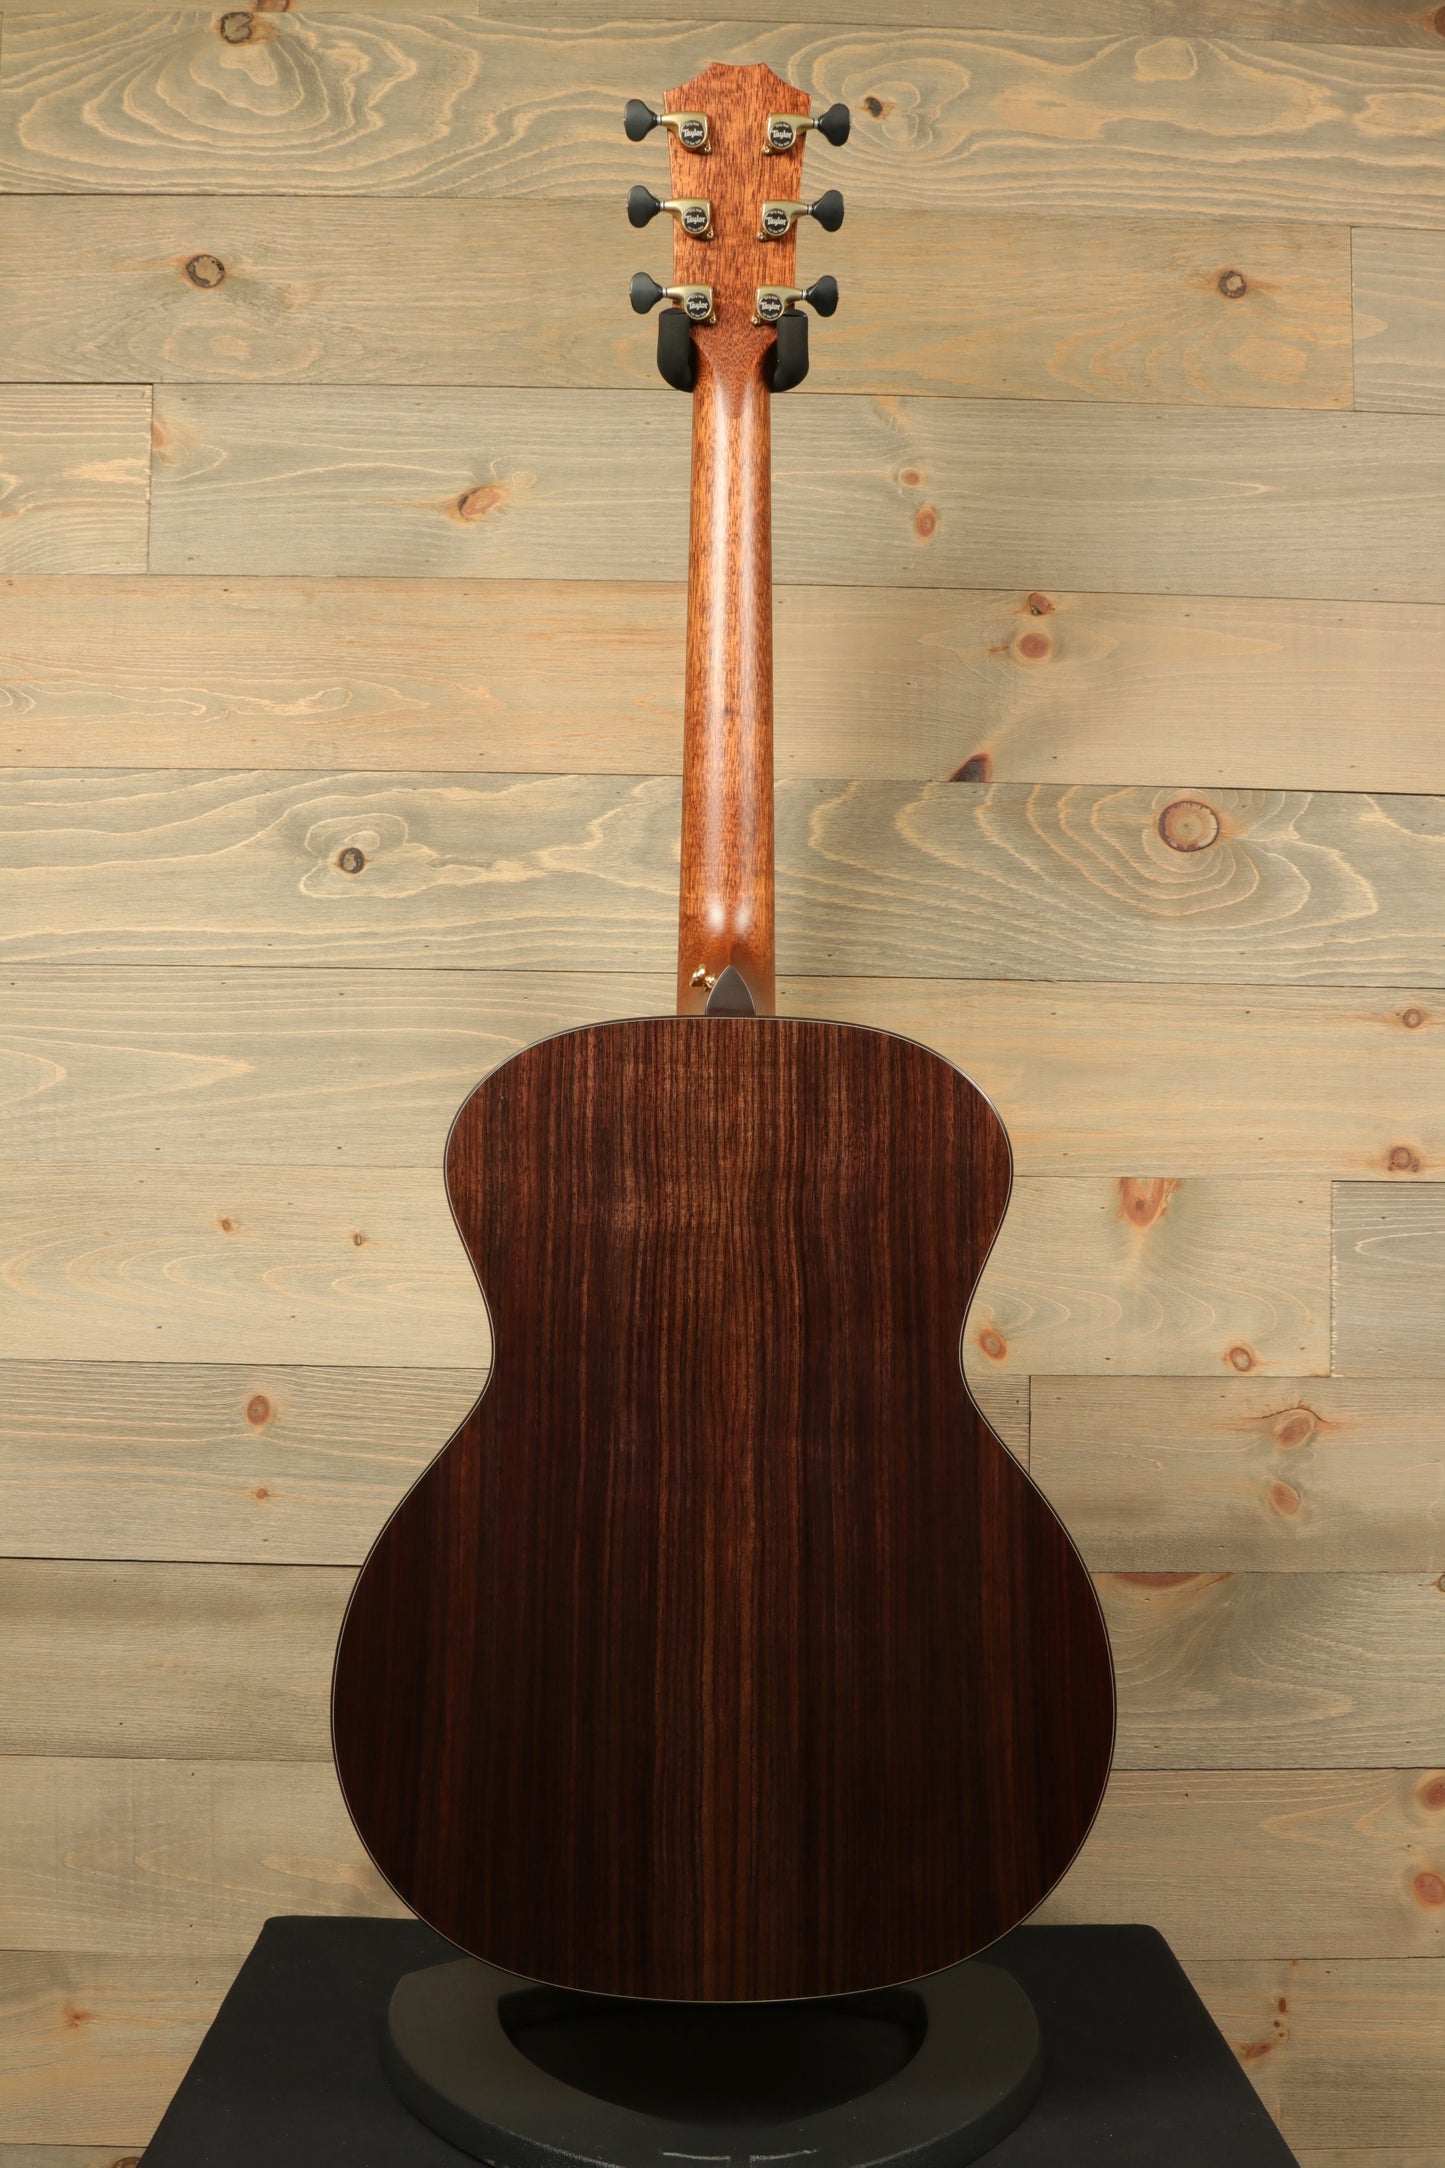 Taylor Custom GA Premium Adirondack Spruce and AA Rosewood (Mojo's Music LTD Guitar) 814 - 914